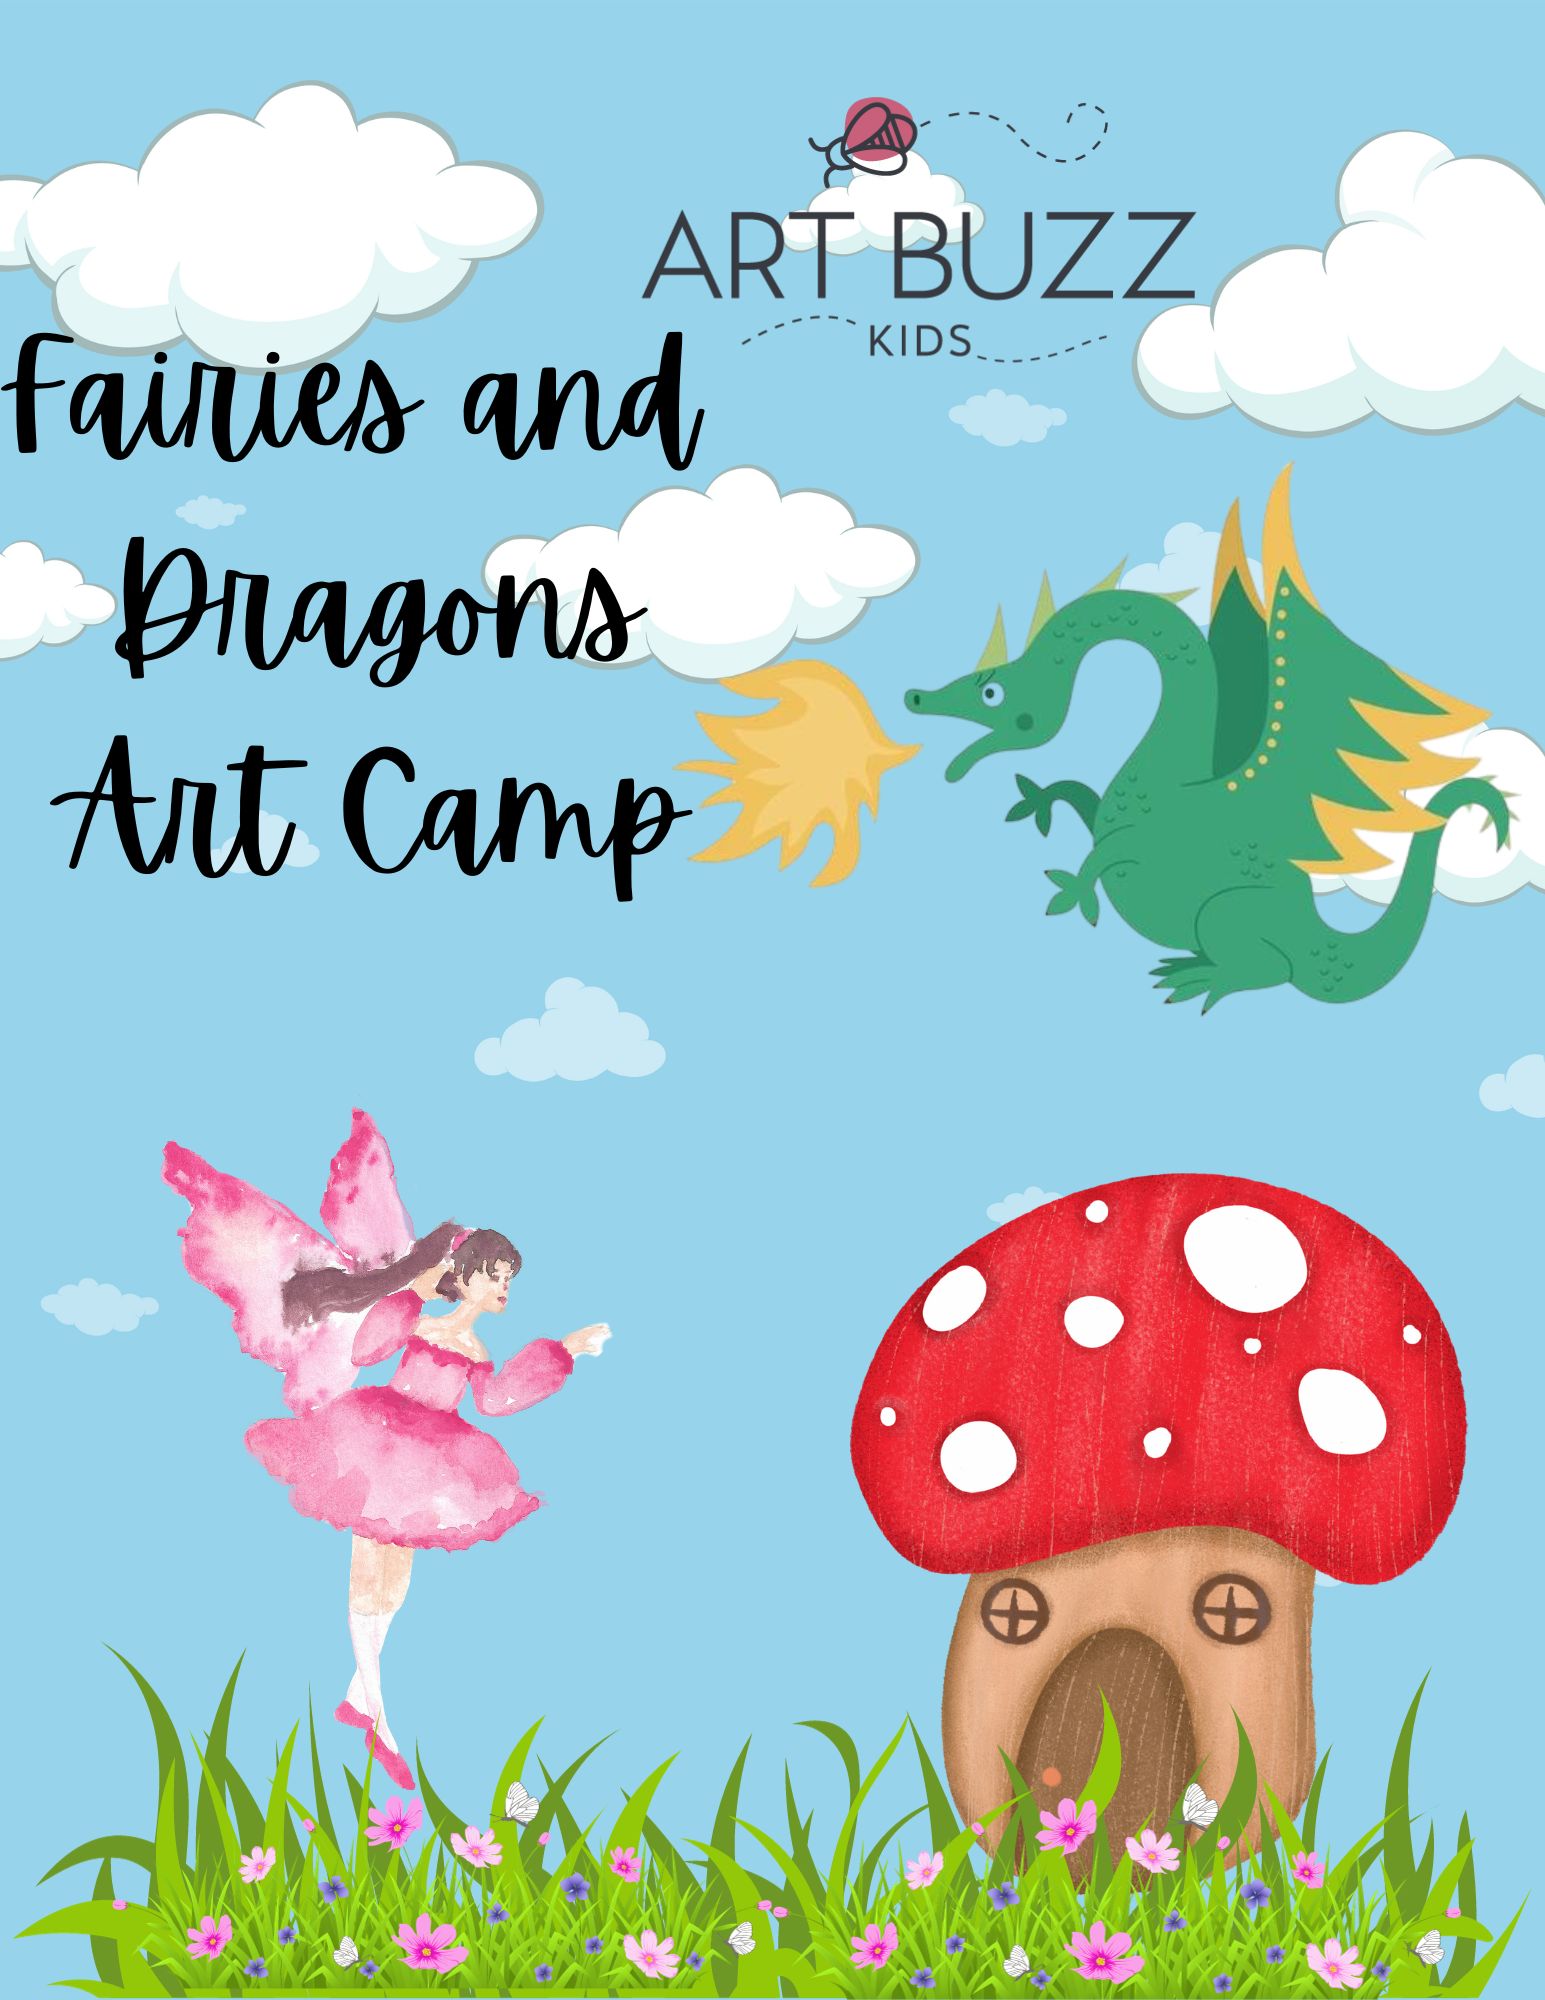 One Day Art Buzz Kids Camp - Fairies & Dragons